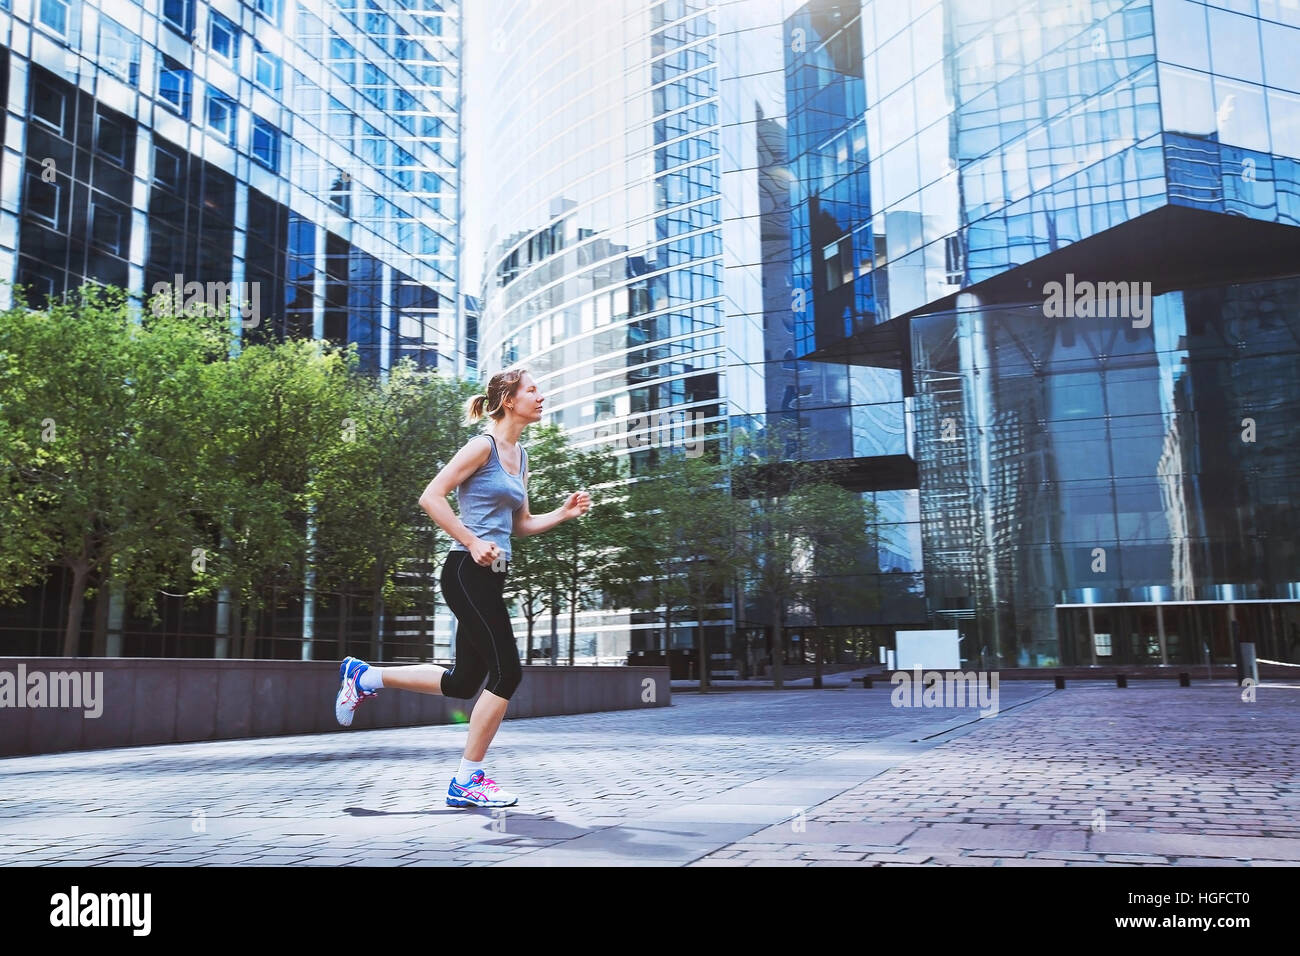 runner in the city Stock Photo